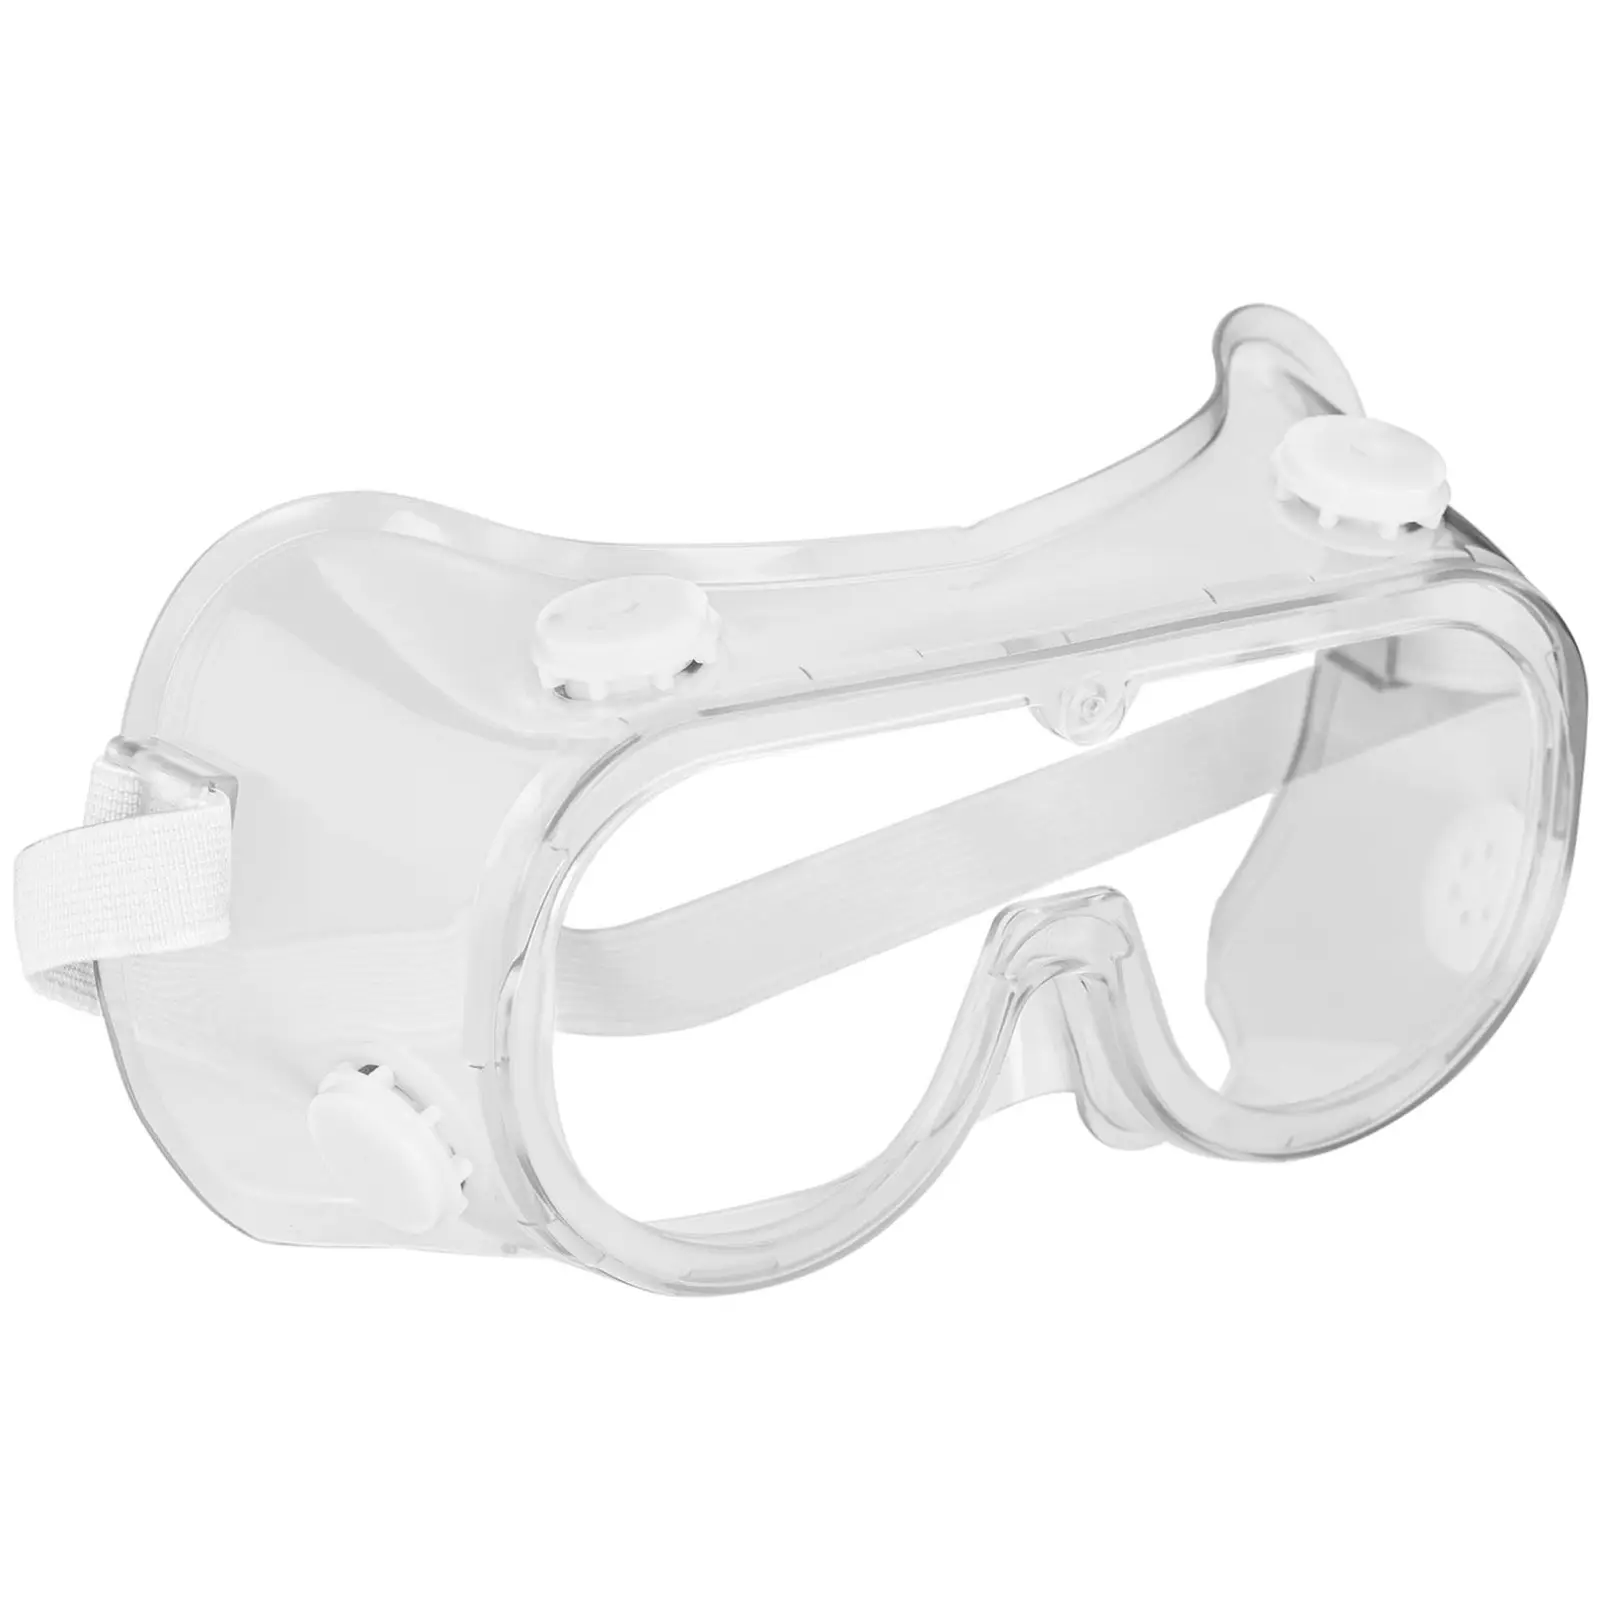 Ochranné brýle - 3 dílná sada - čiré - jedna velikost